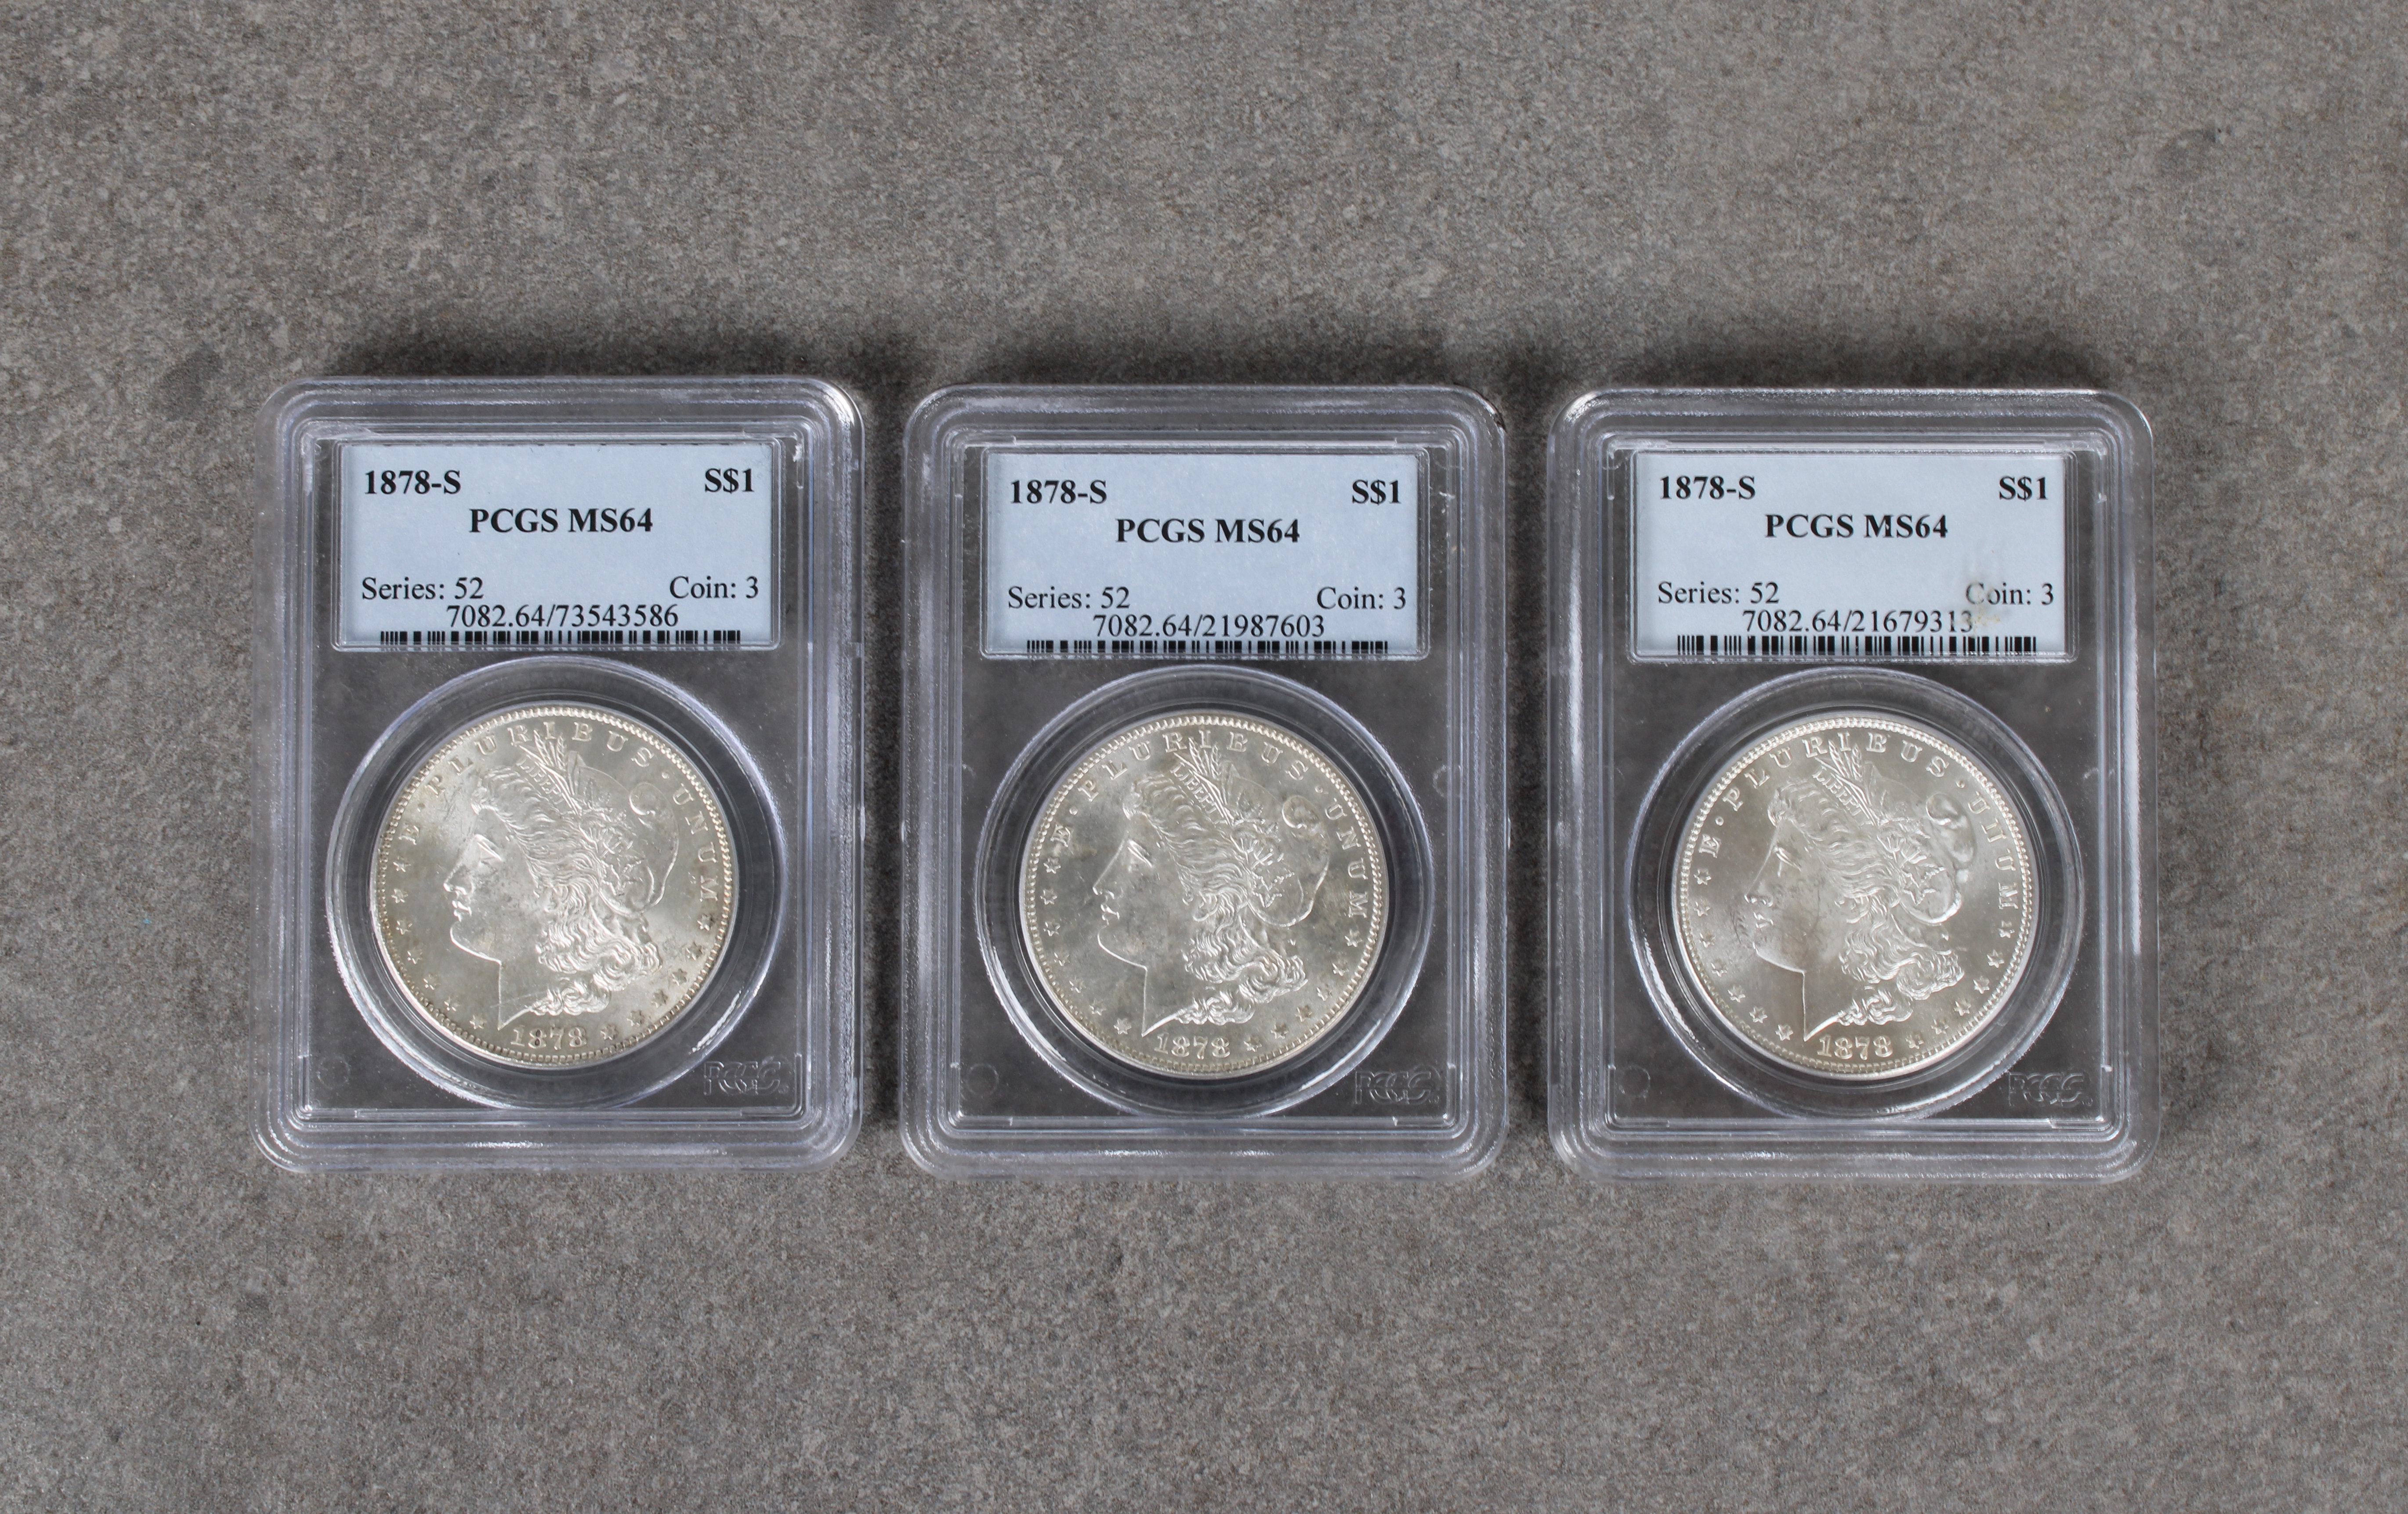 Three x 1878-S Morgan Dollar series: 52 coin: 3 - PCGS graded